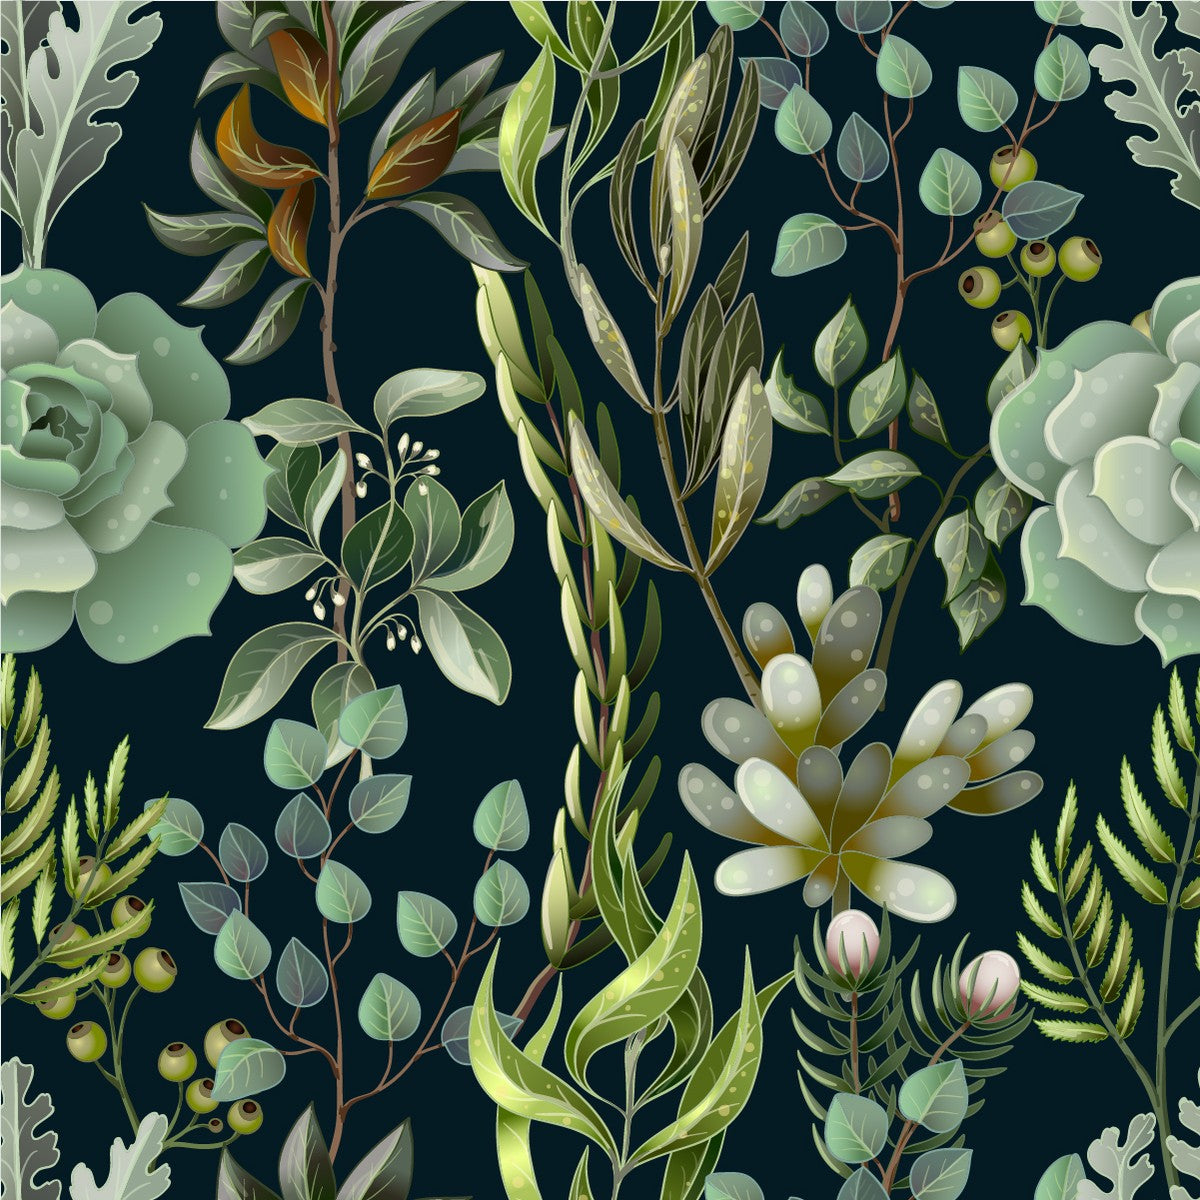 Cactus Succulent Wallpaper  iPhone Android  Desktop Backgrounds